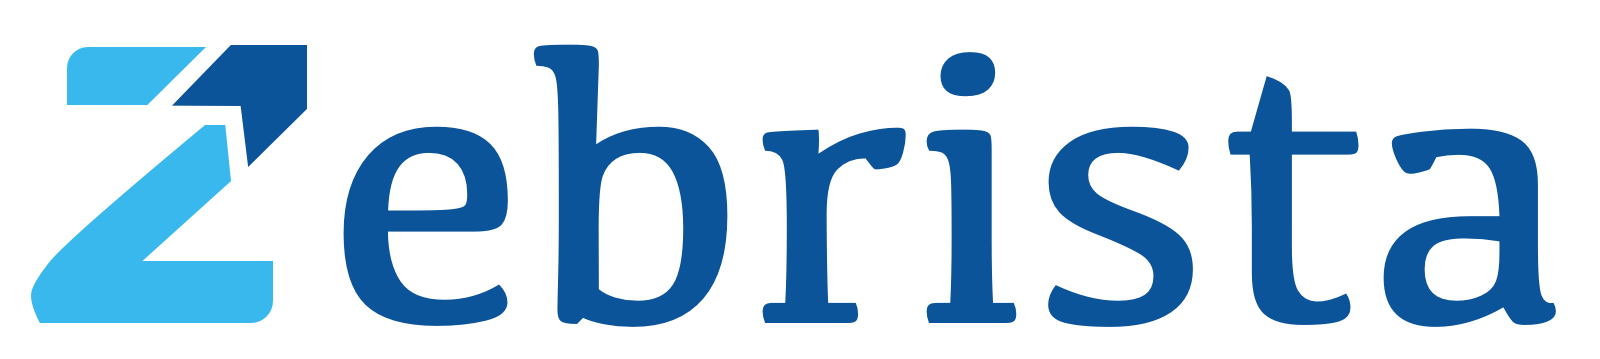 Logo Zebrista